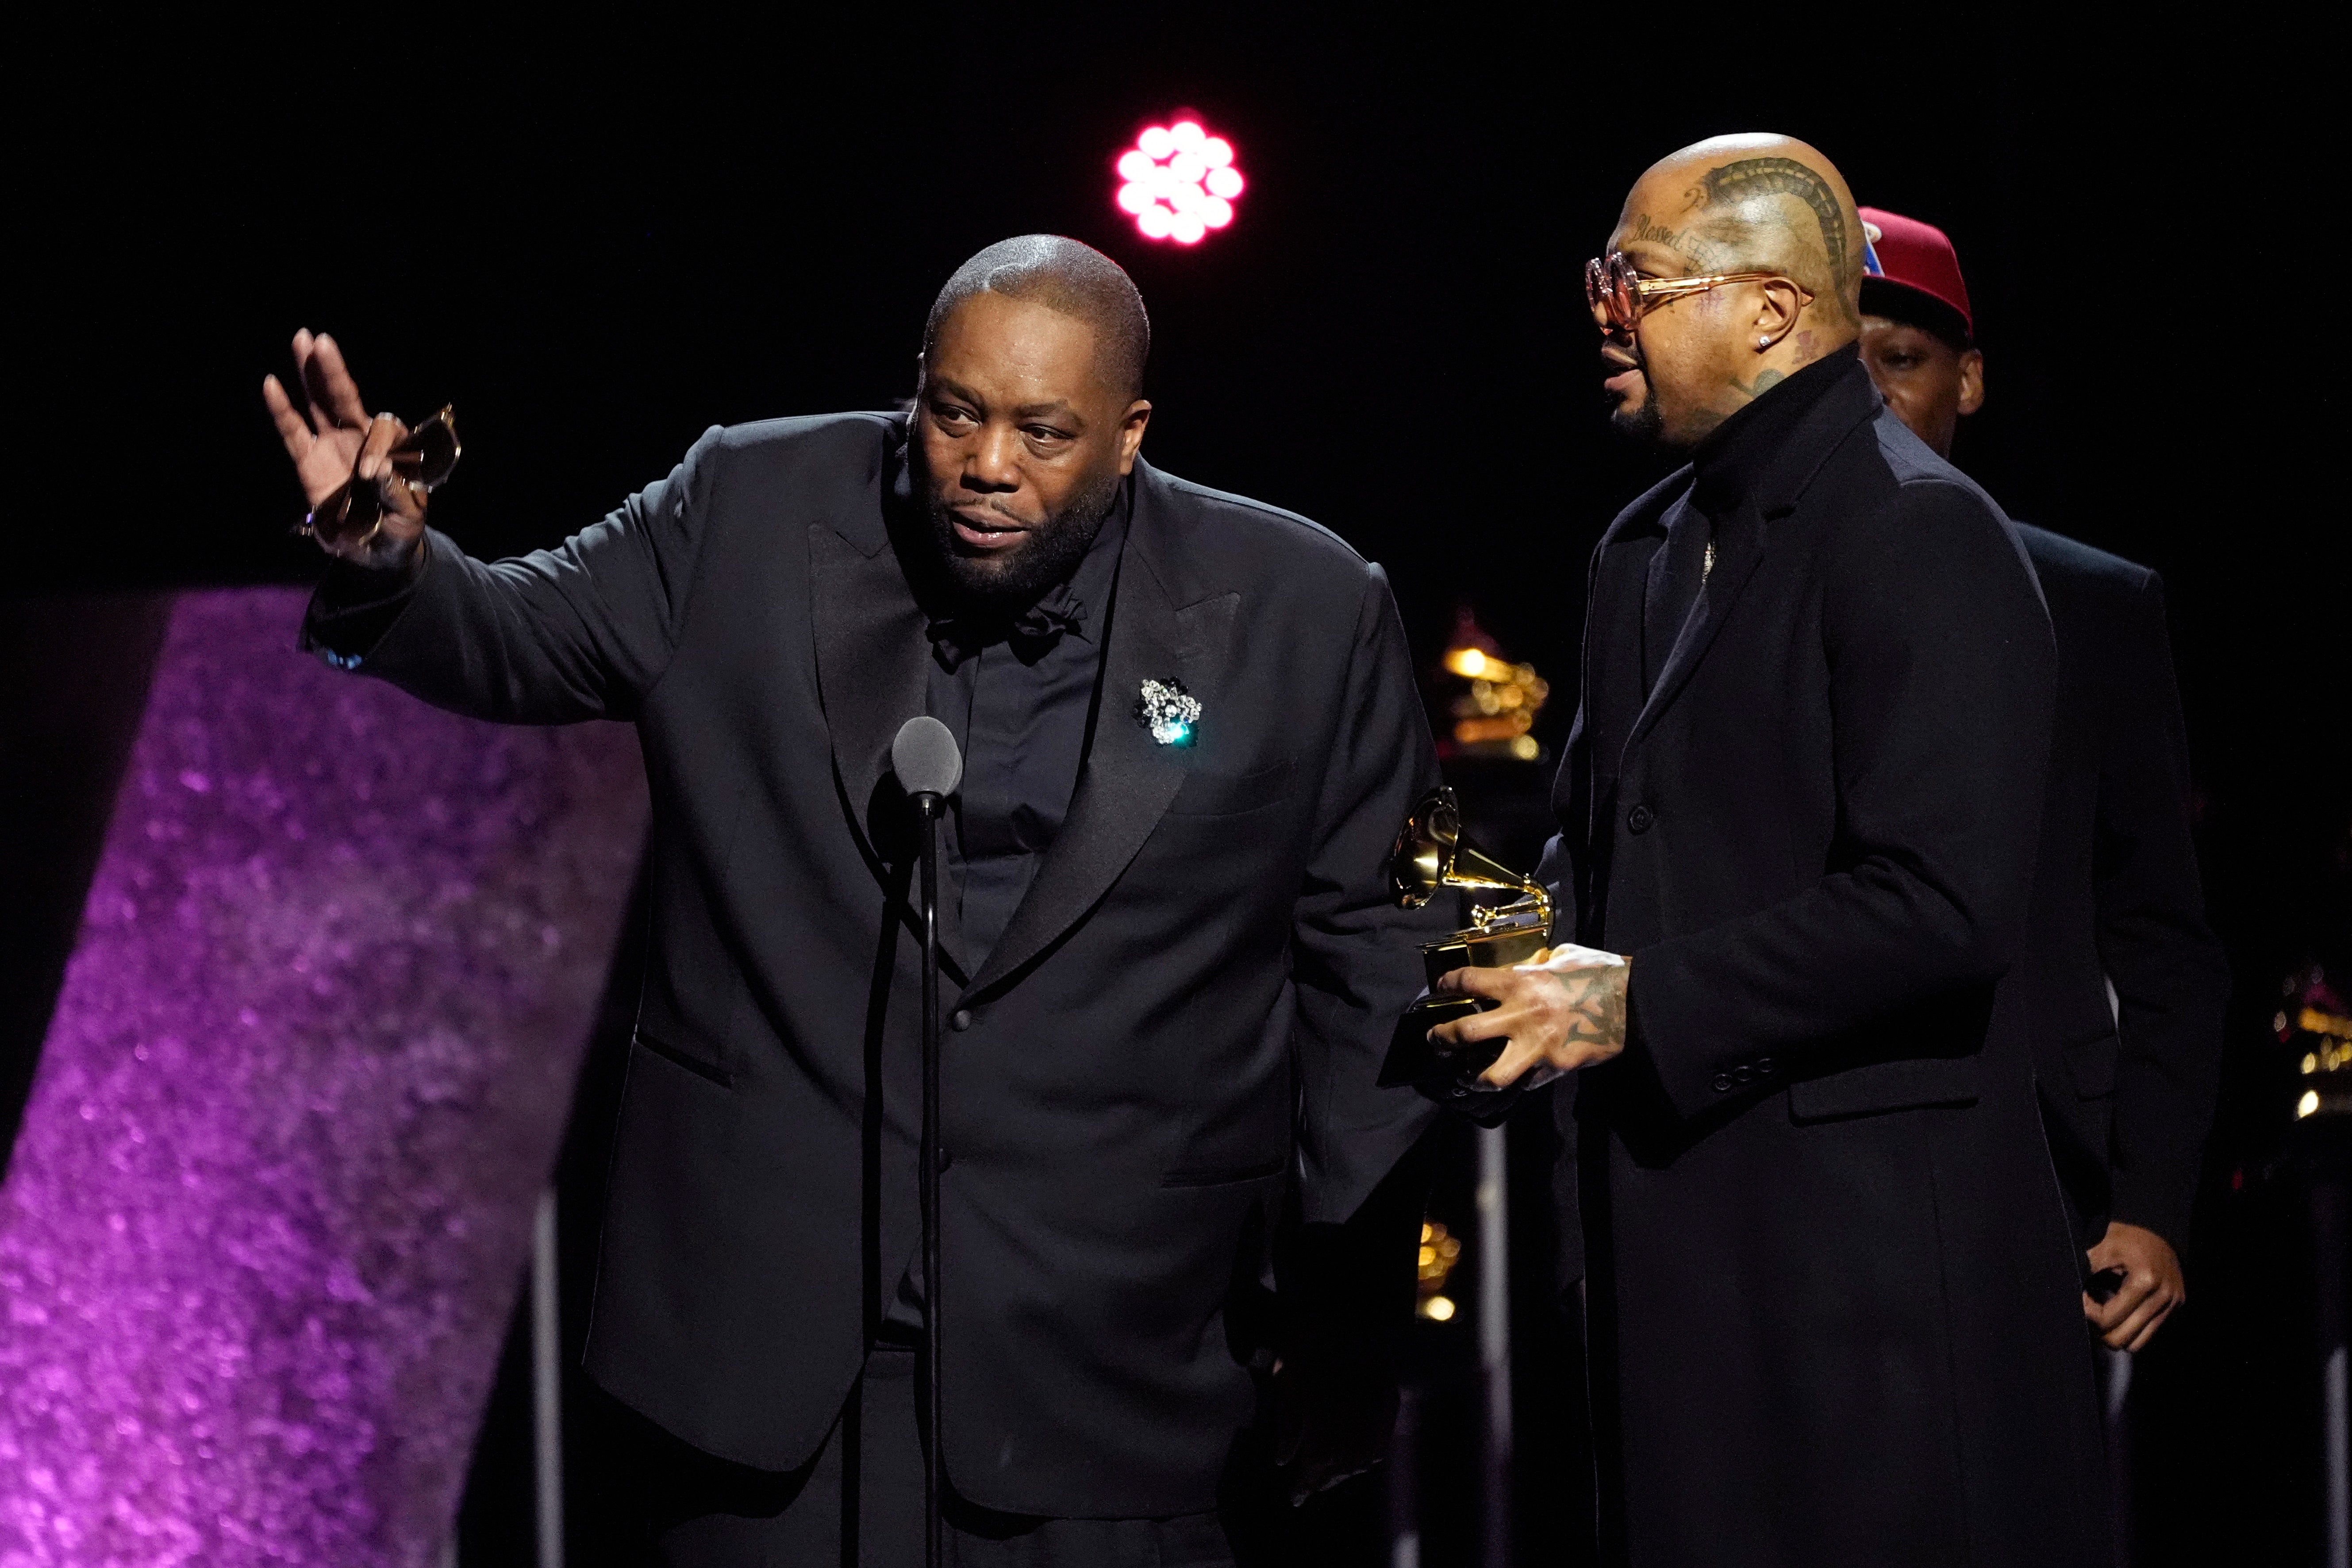 Killer Mike wins Grammys for Best Rap Album, Best Rap Song and Best Rap Performance